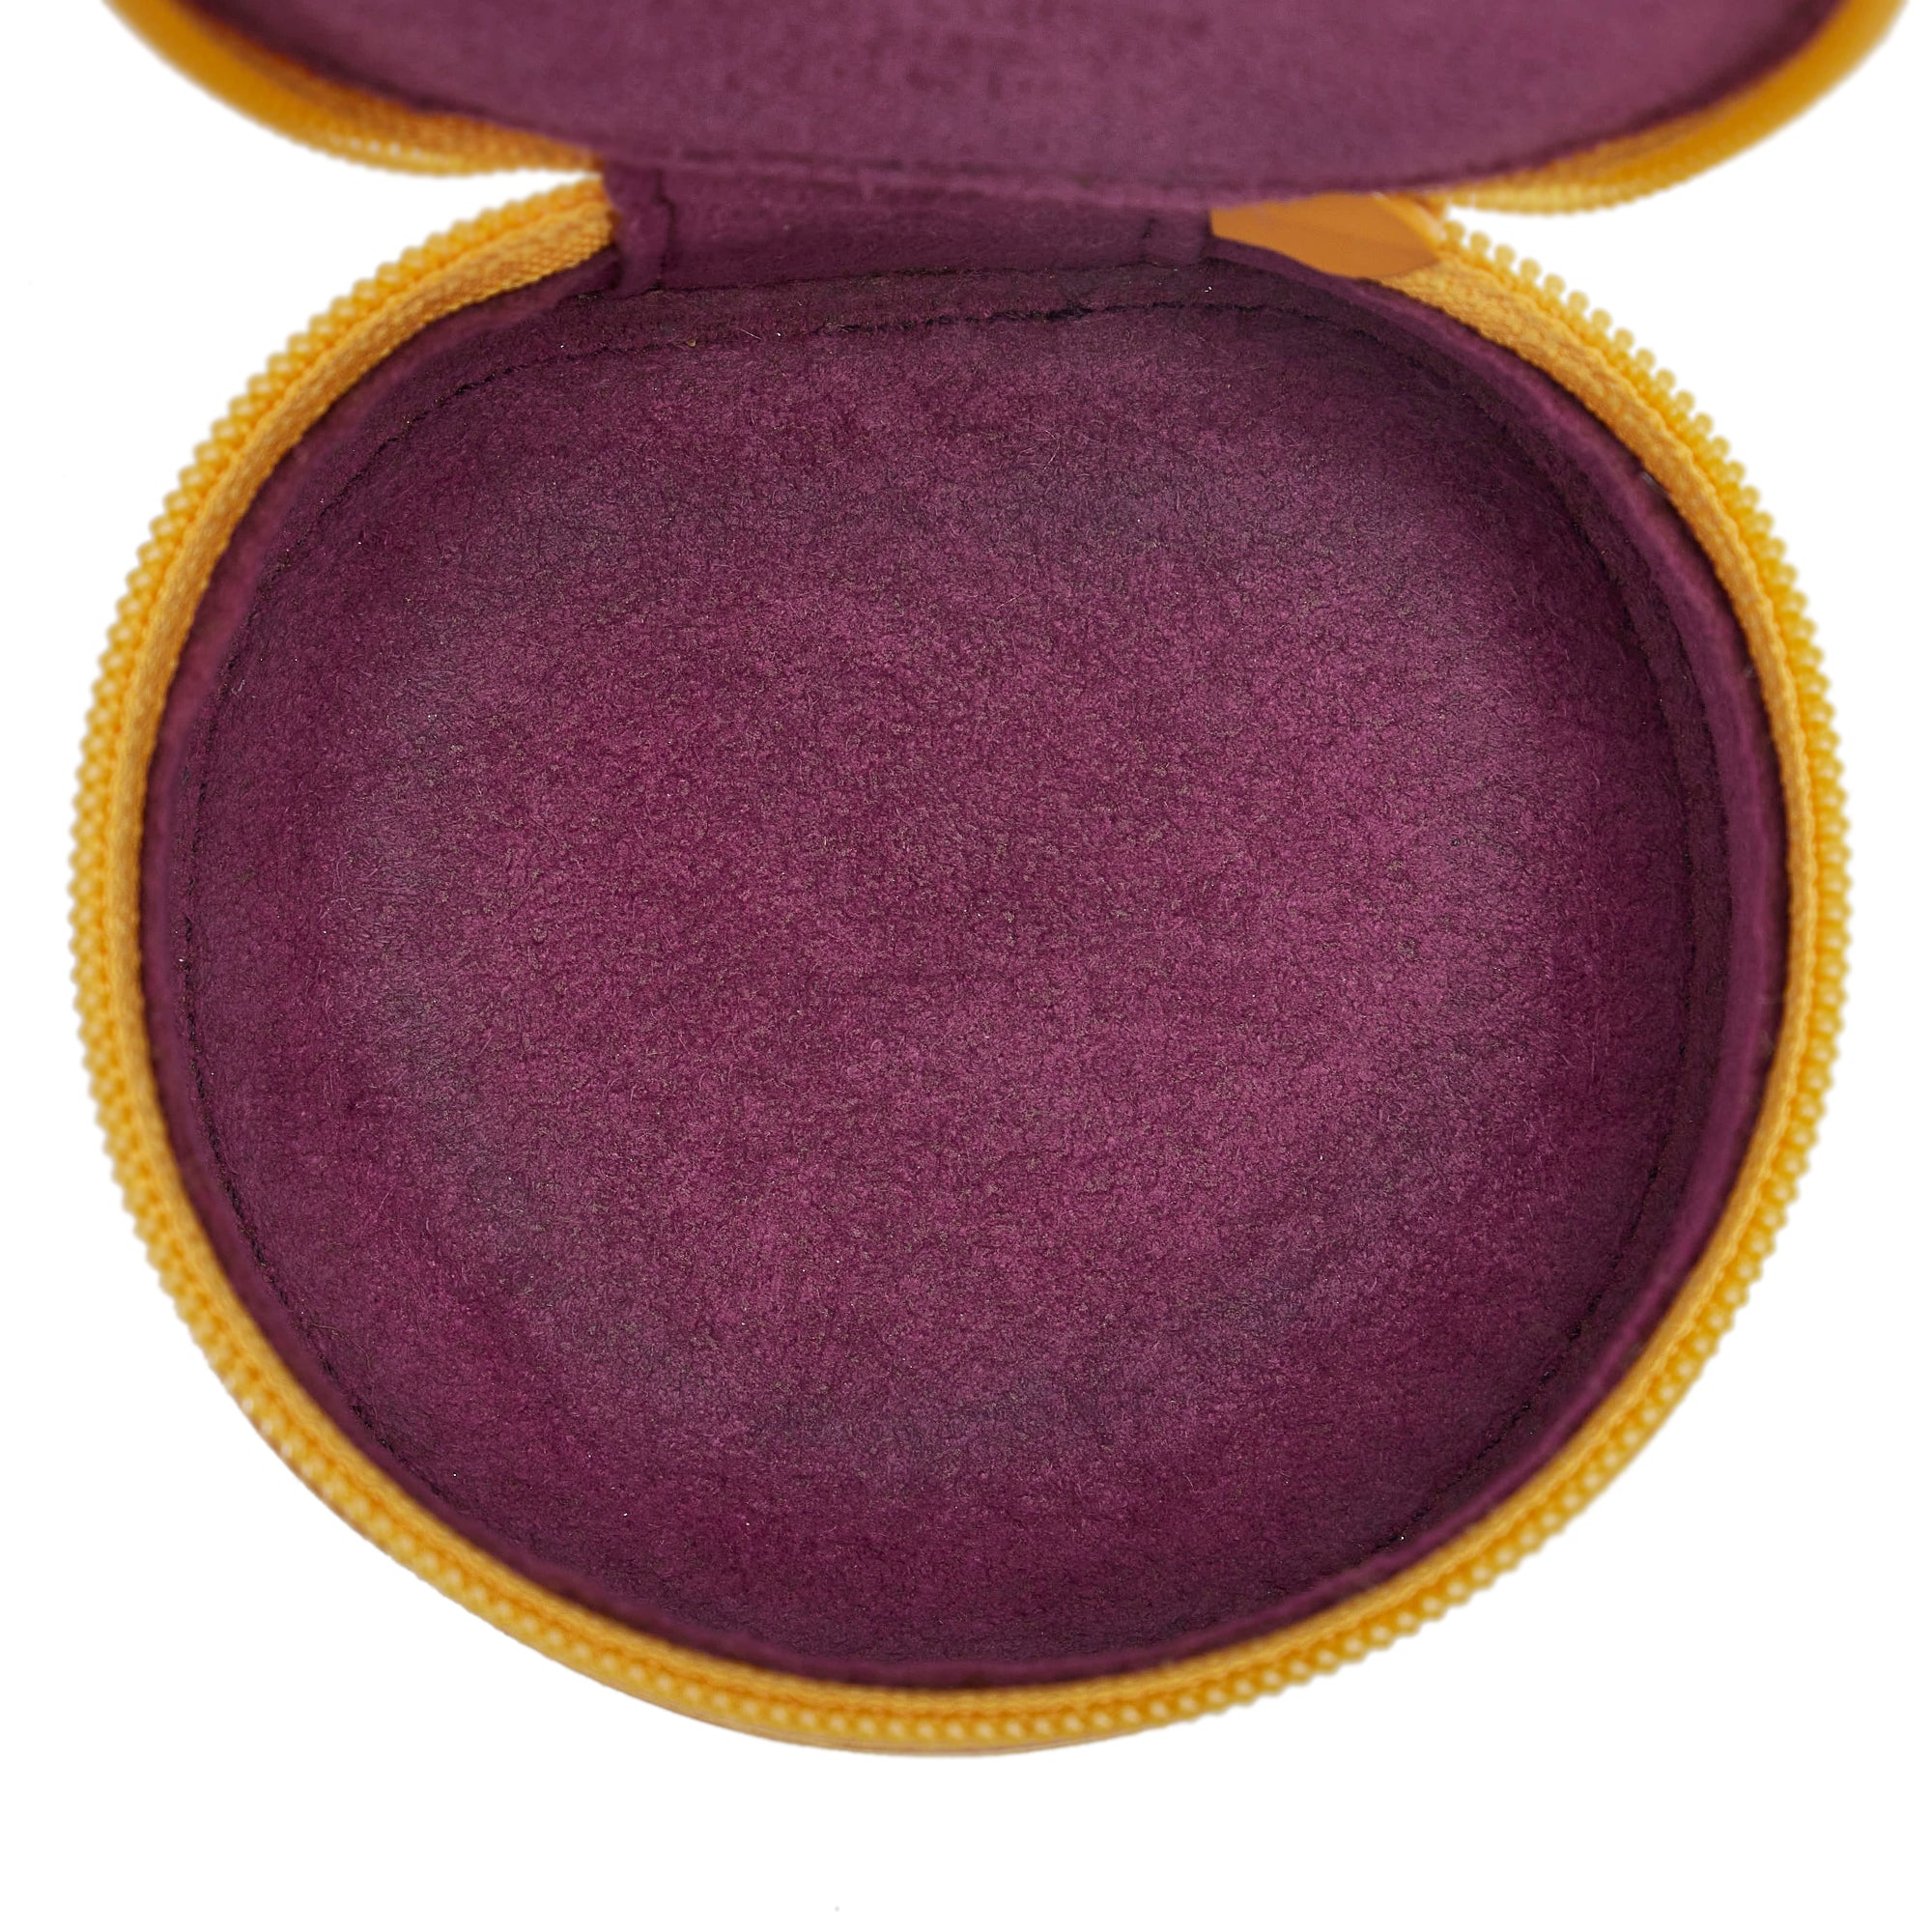 Authenticated Used Louis Vuitton Epi Ecrin Bijoux 10 M48217 Jewelry Case  Castilian Red Epi Leather 